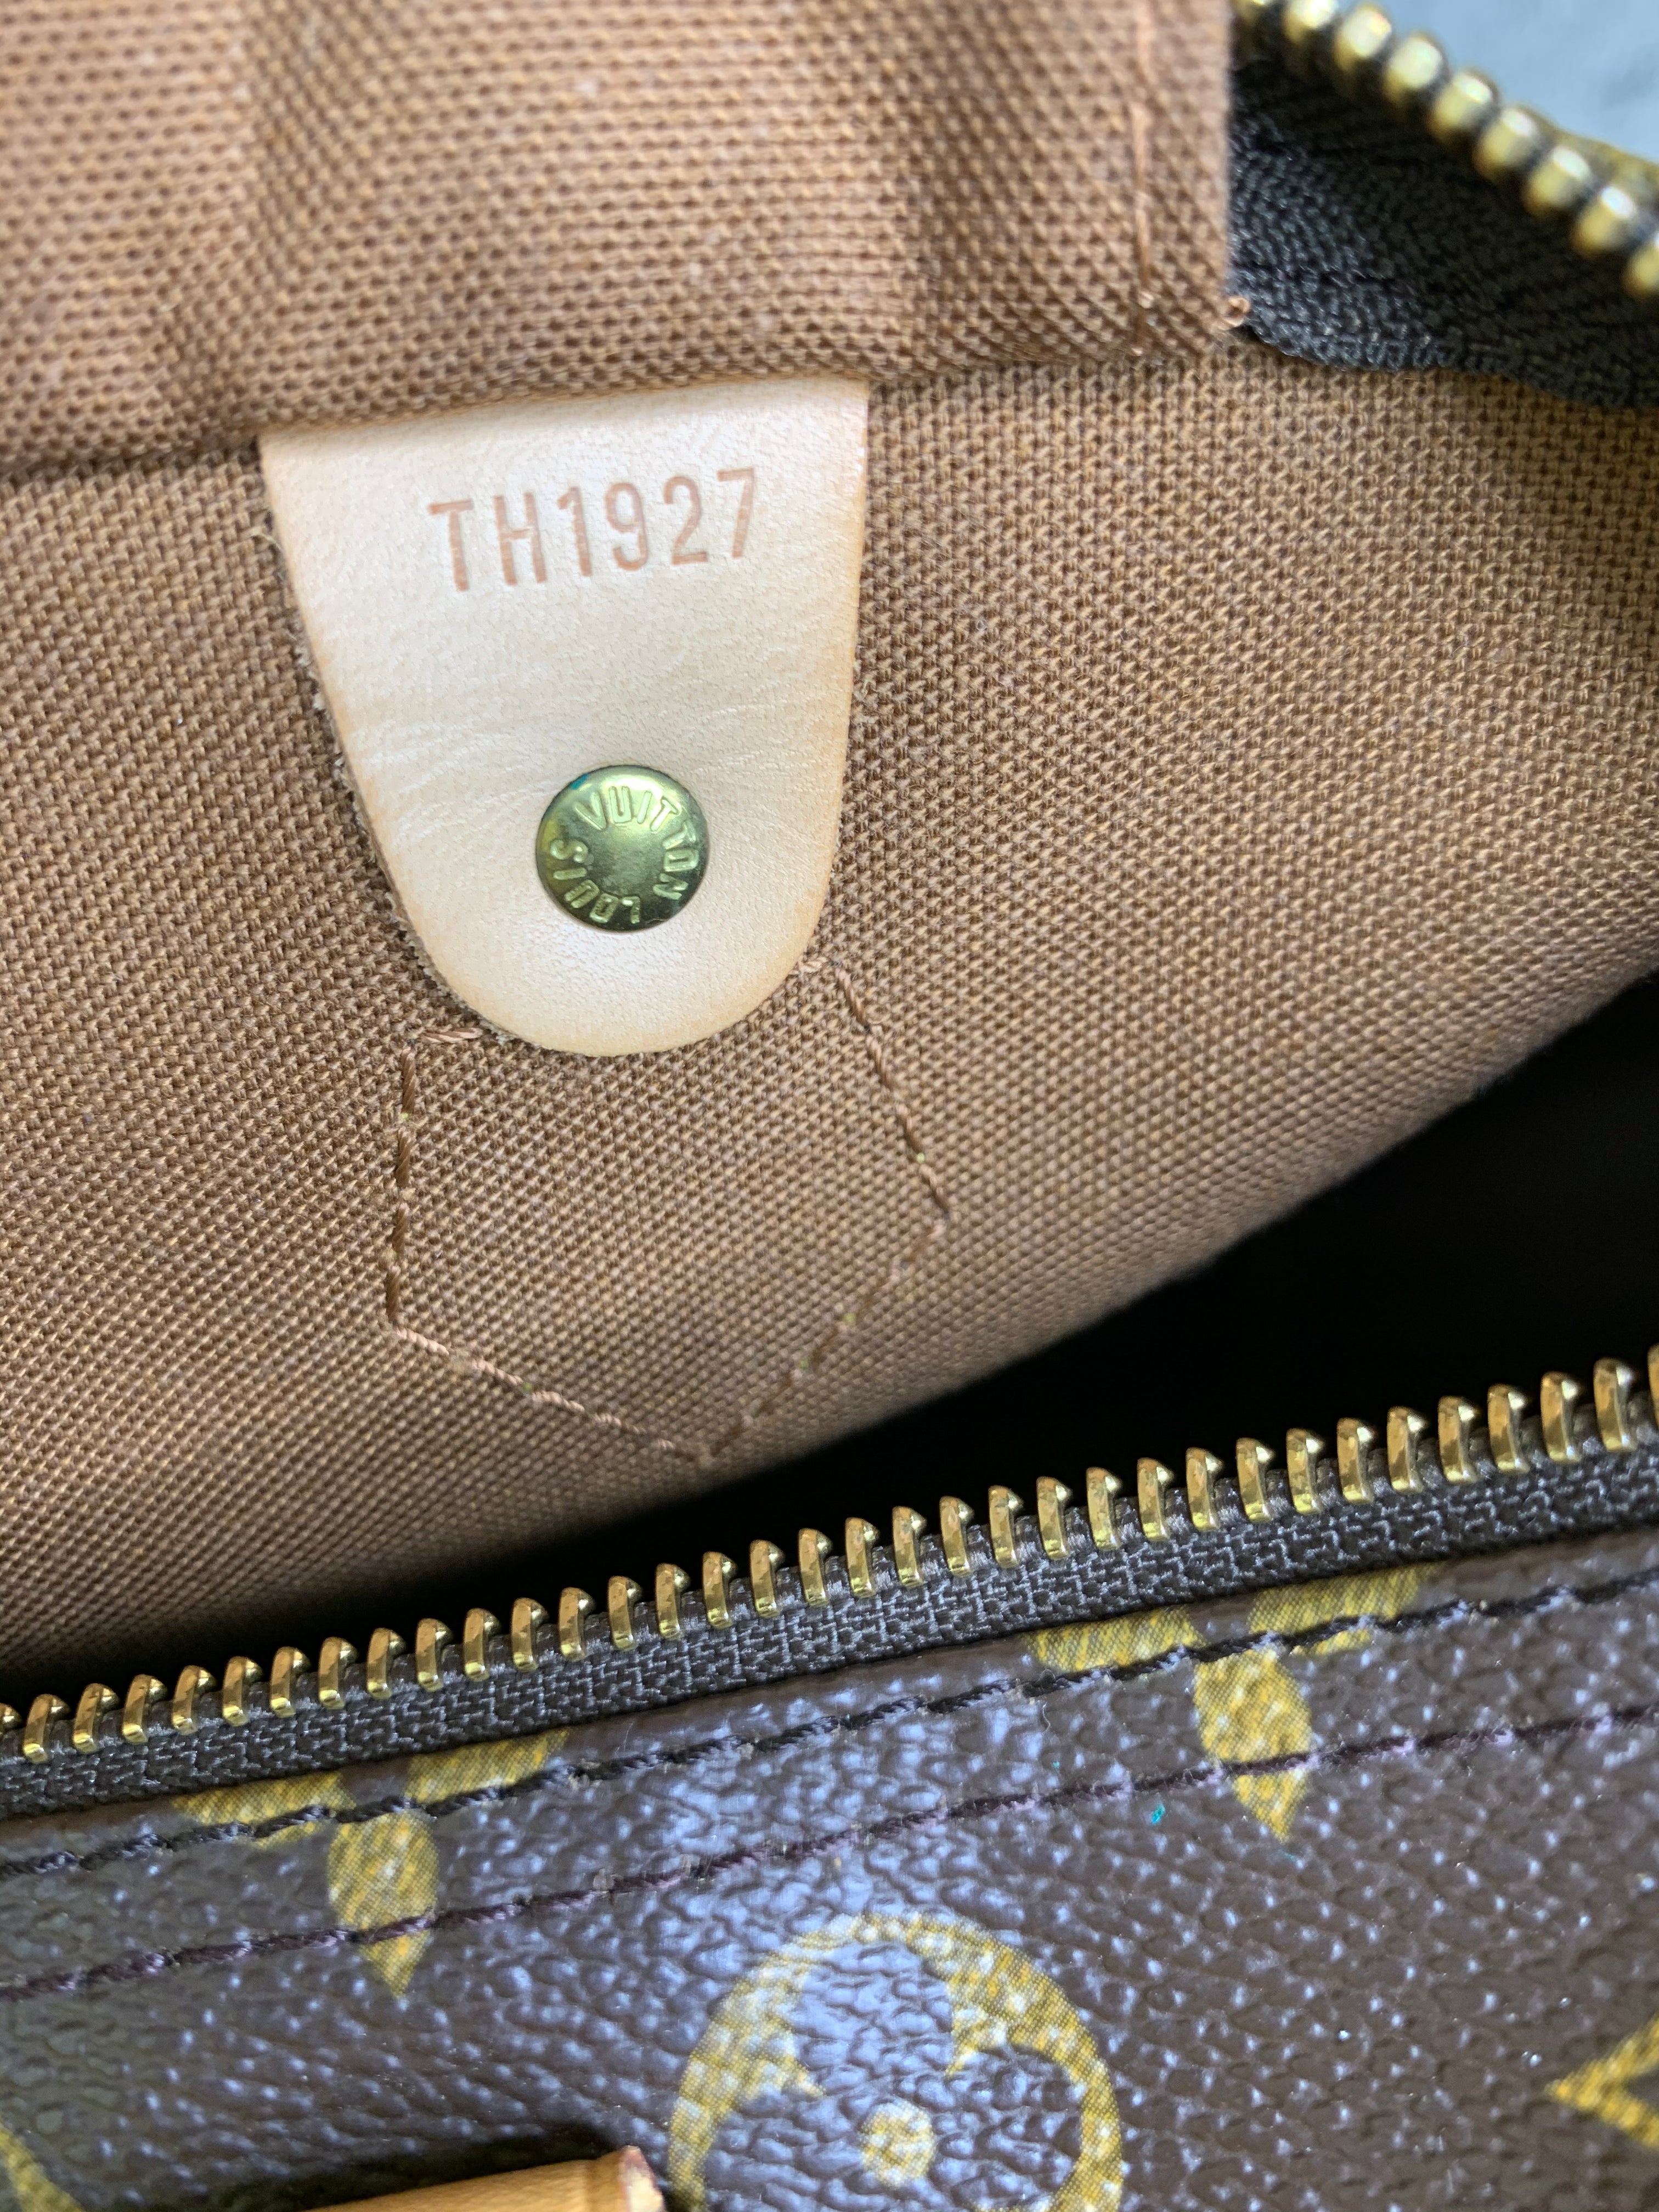 Louis Vuitton Speedy Handbag 373581